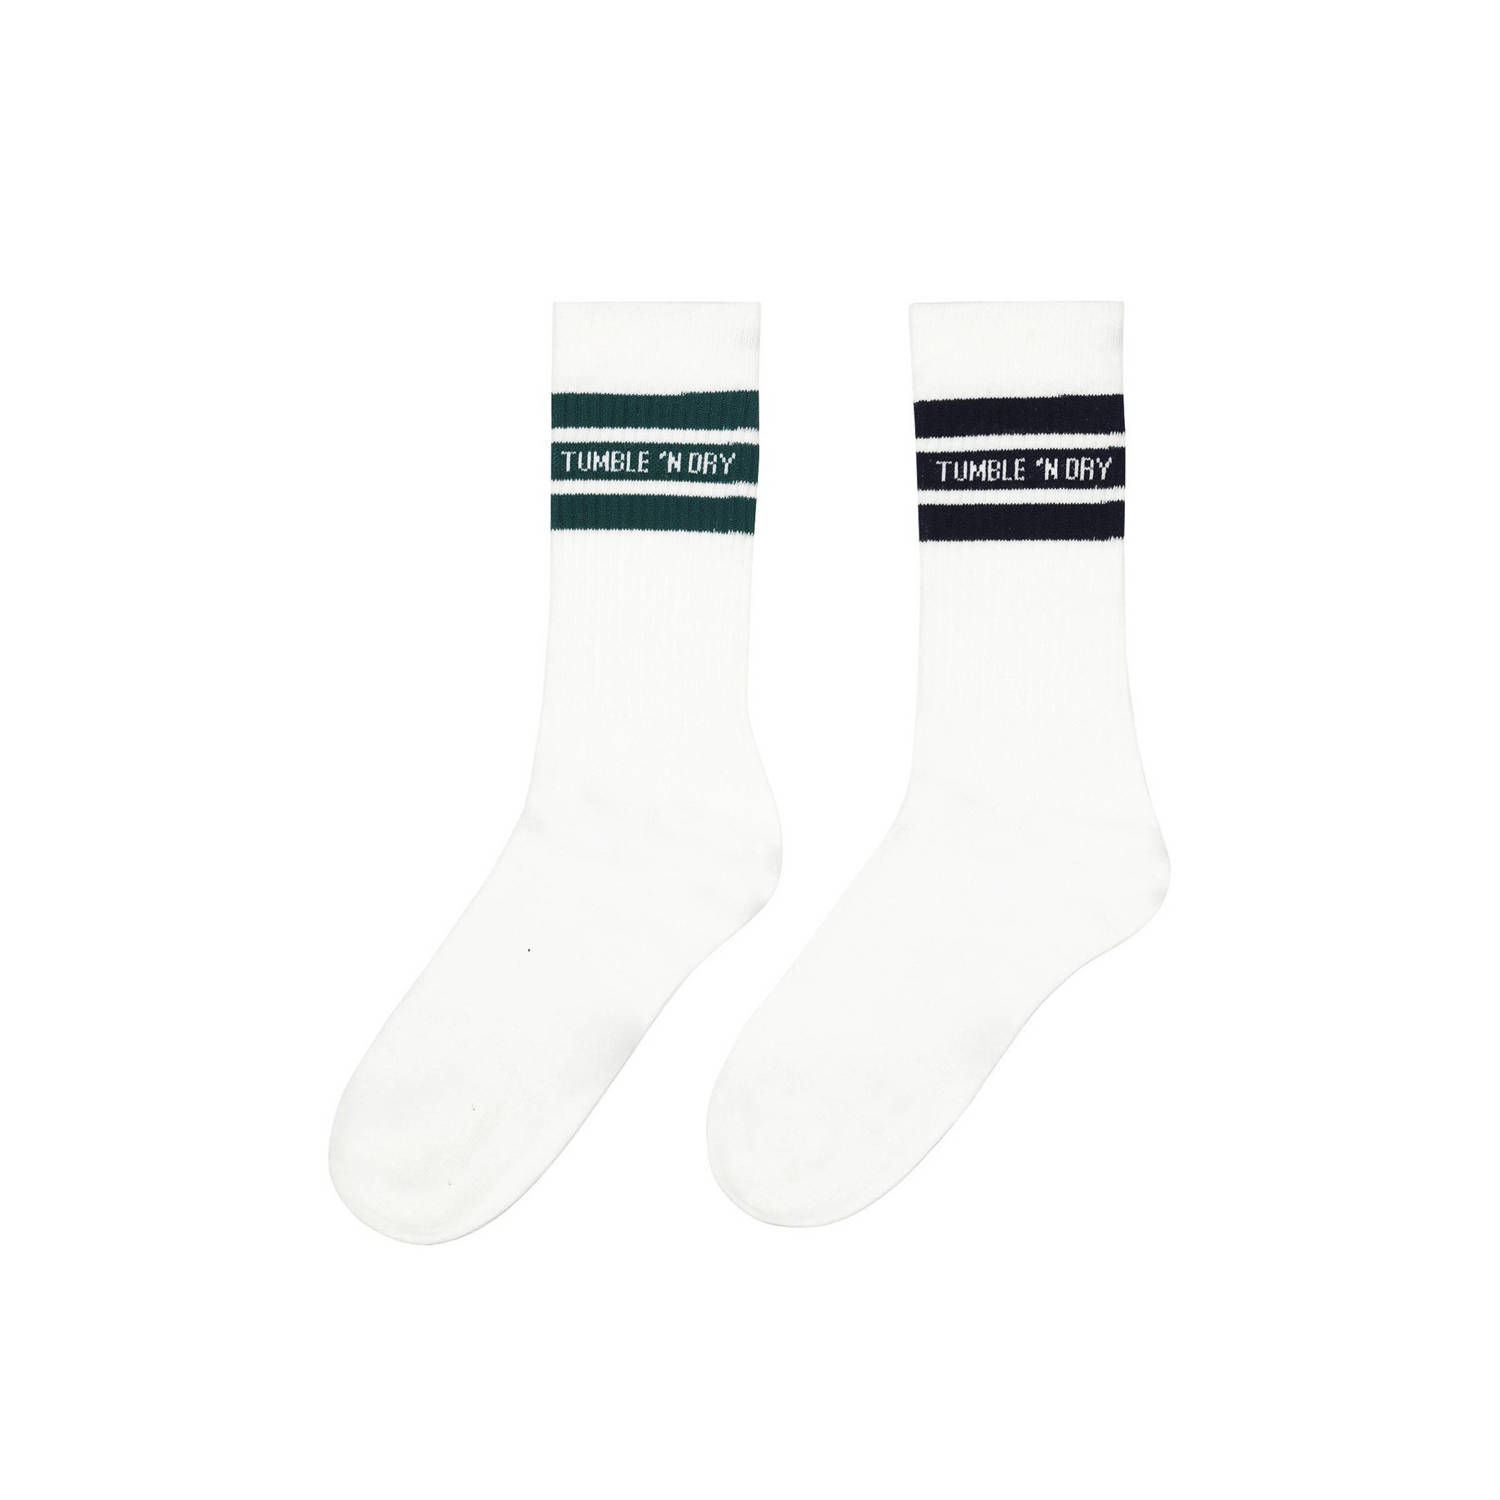 Tumble 'n Dry sokken set van 2 paar wit donkergroen zwart met streep Stretchkatoen 35 38